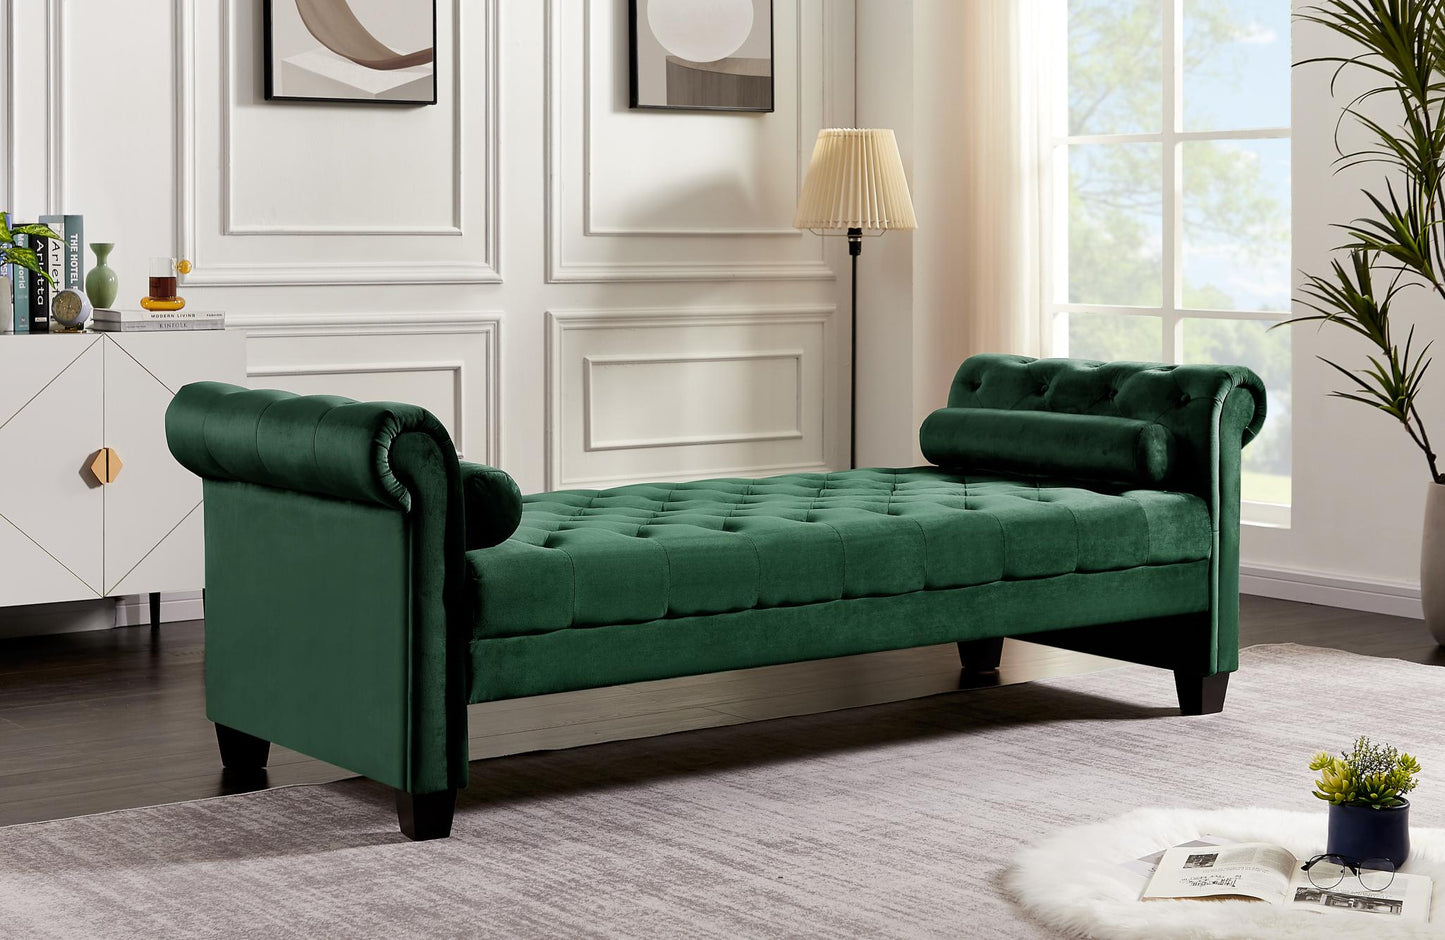 The Mozelle 82.3" Rectangular Large Chaise Lounge Green